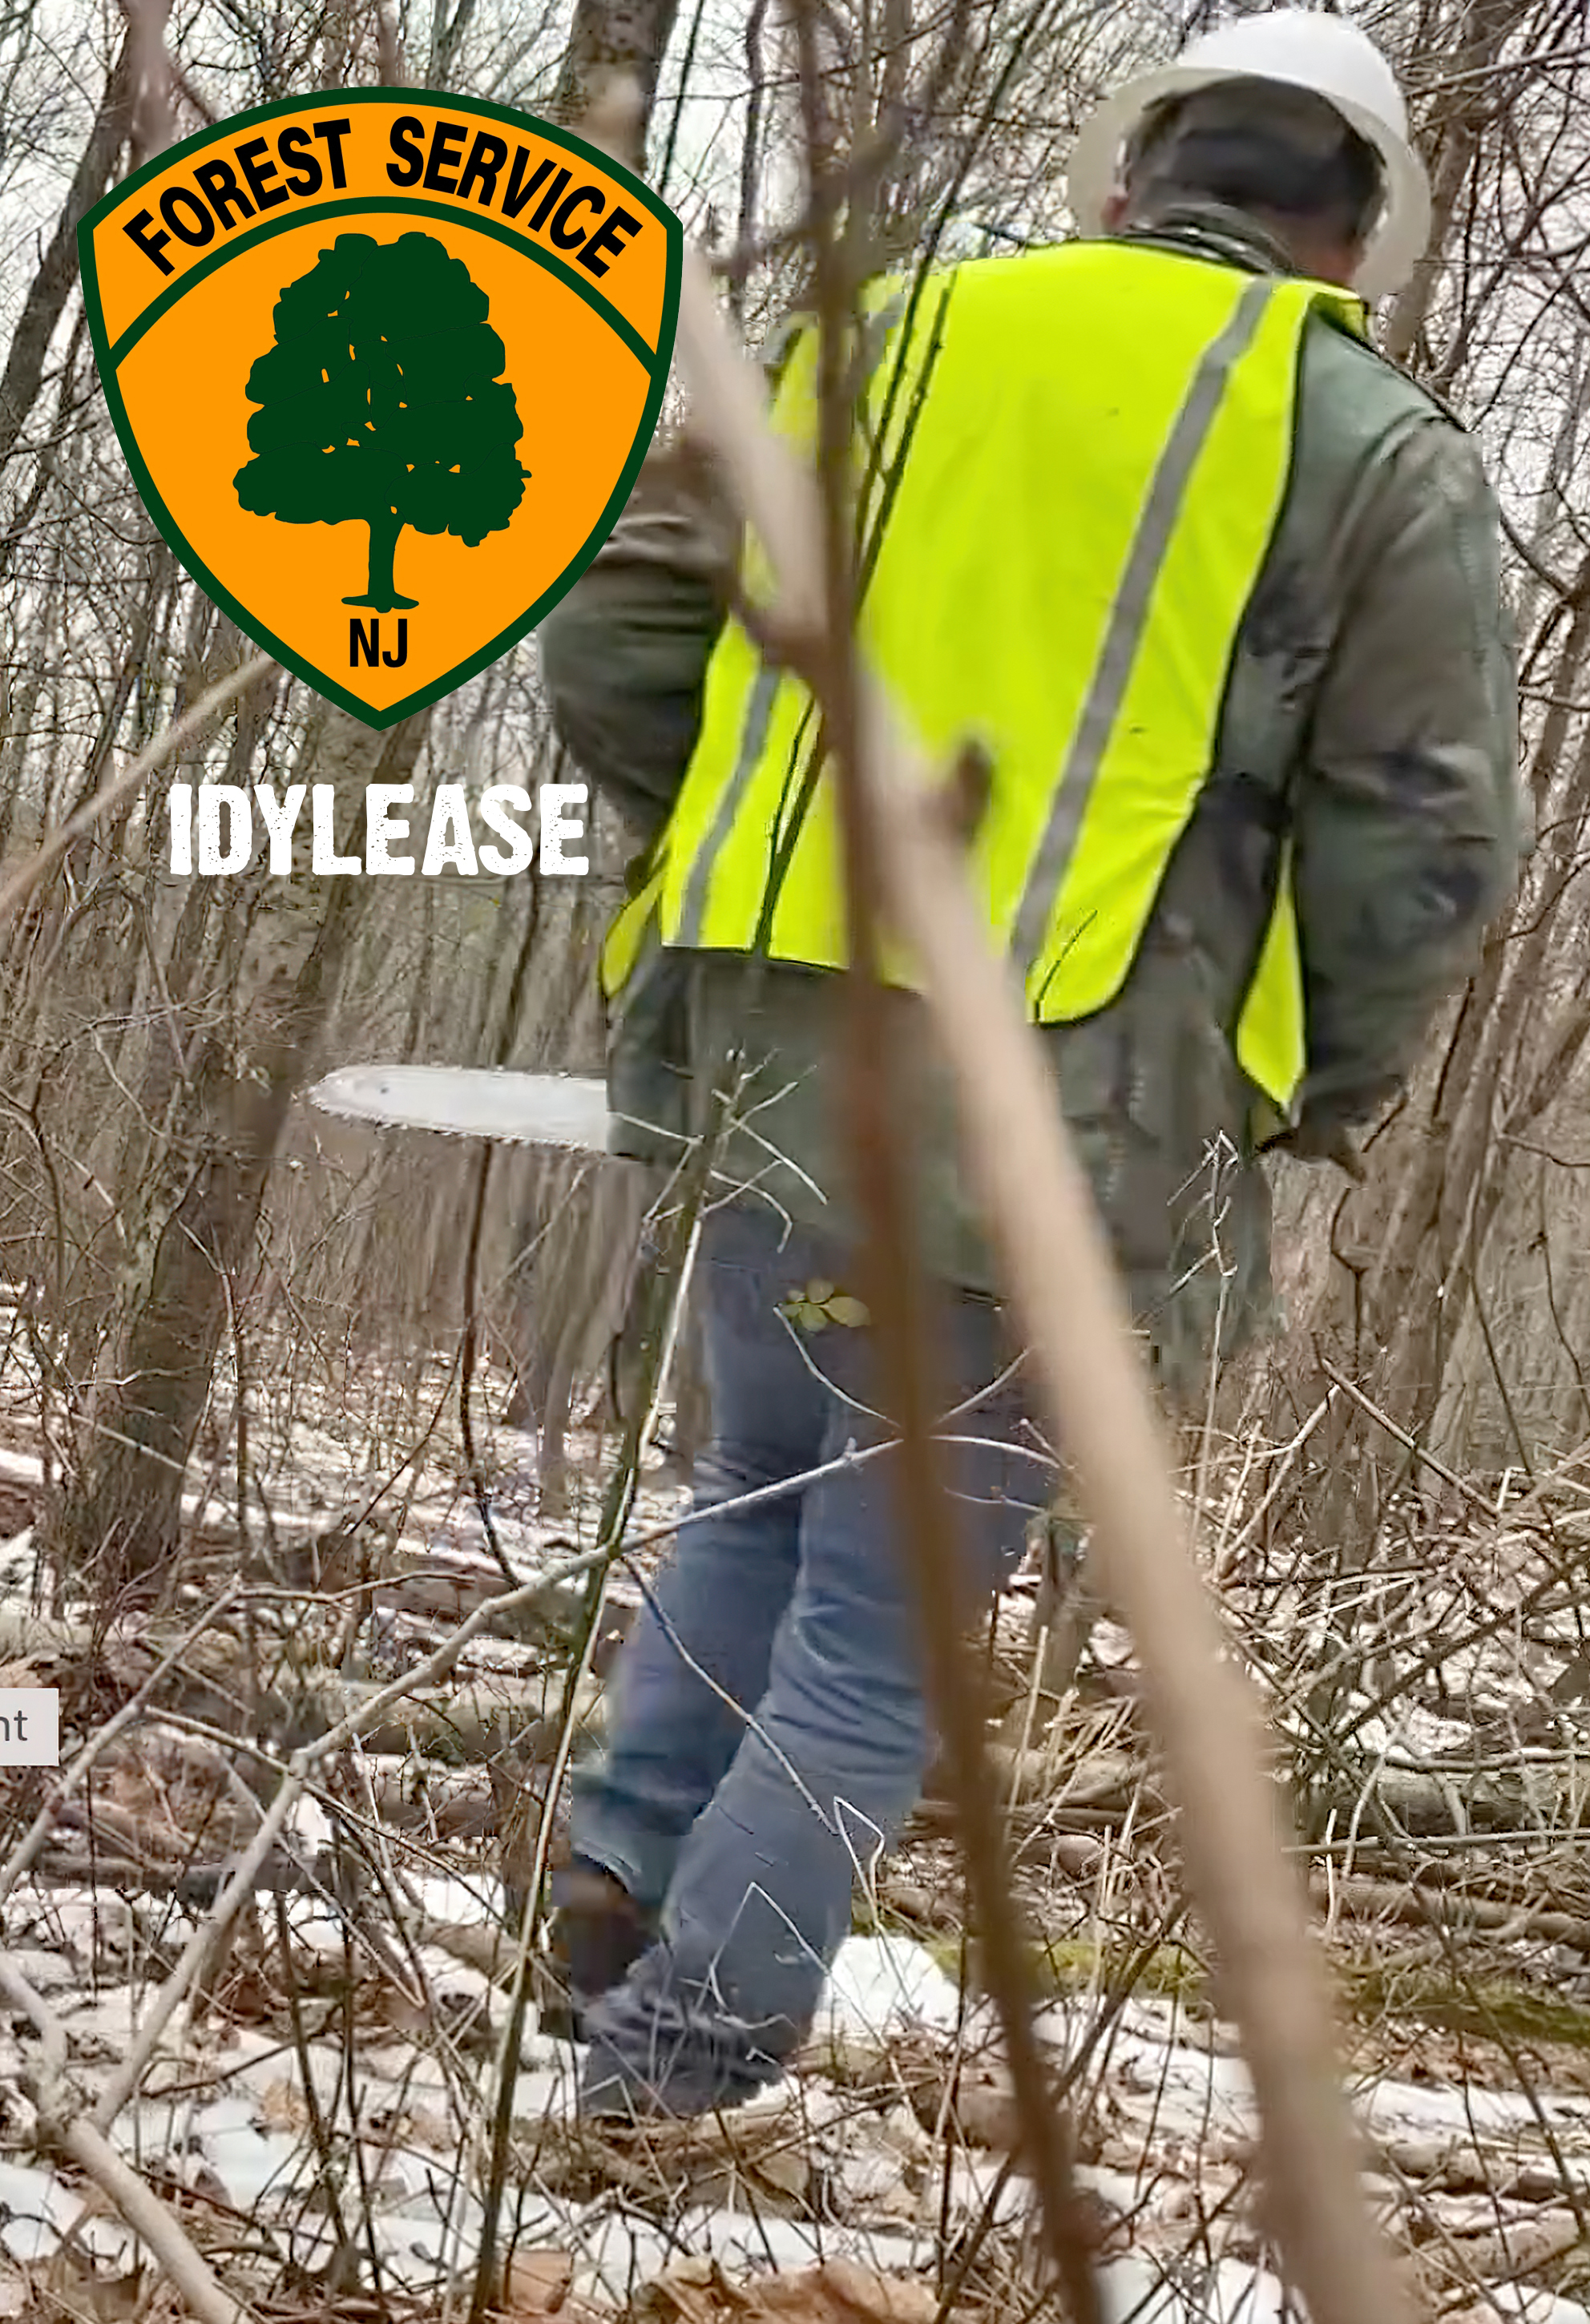 Richard Zampella cutting trees at Idylease